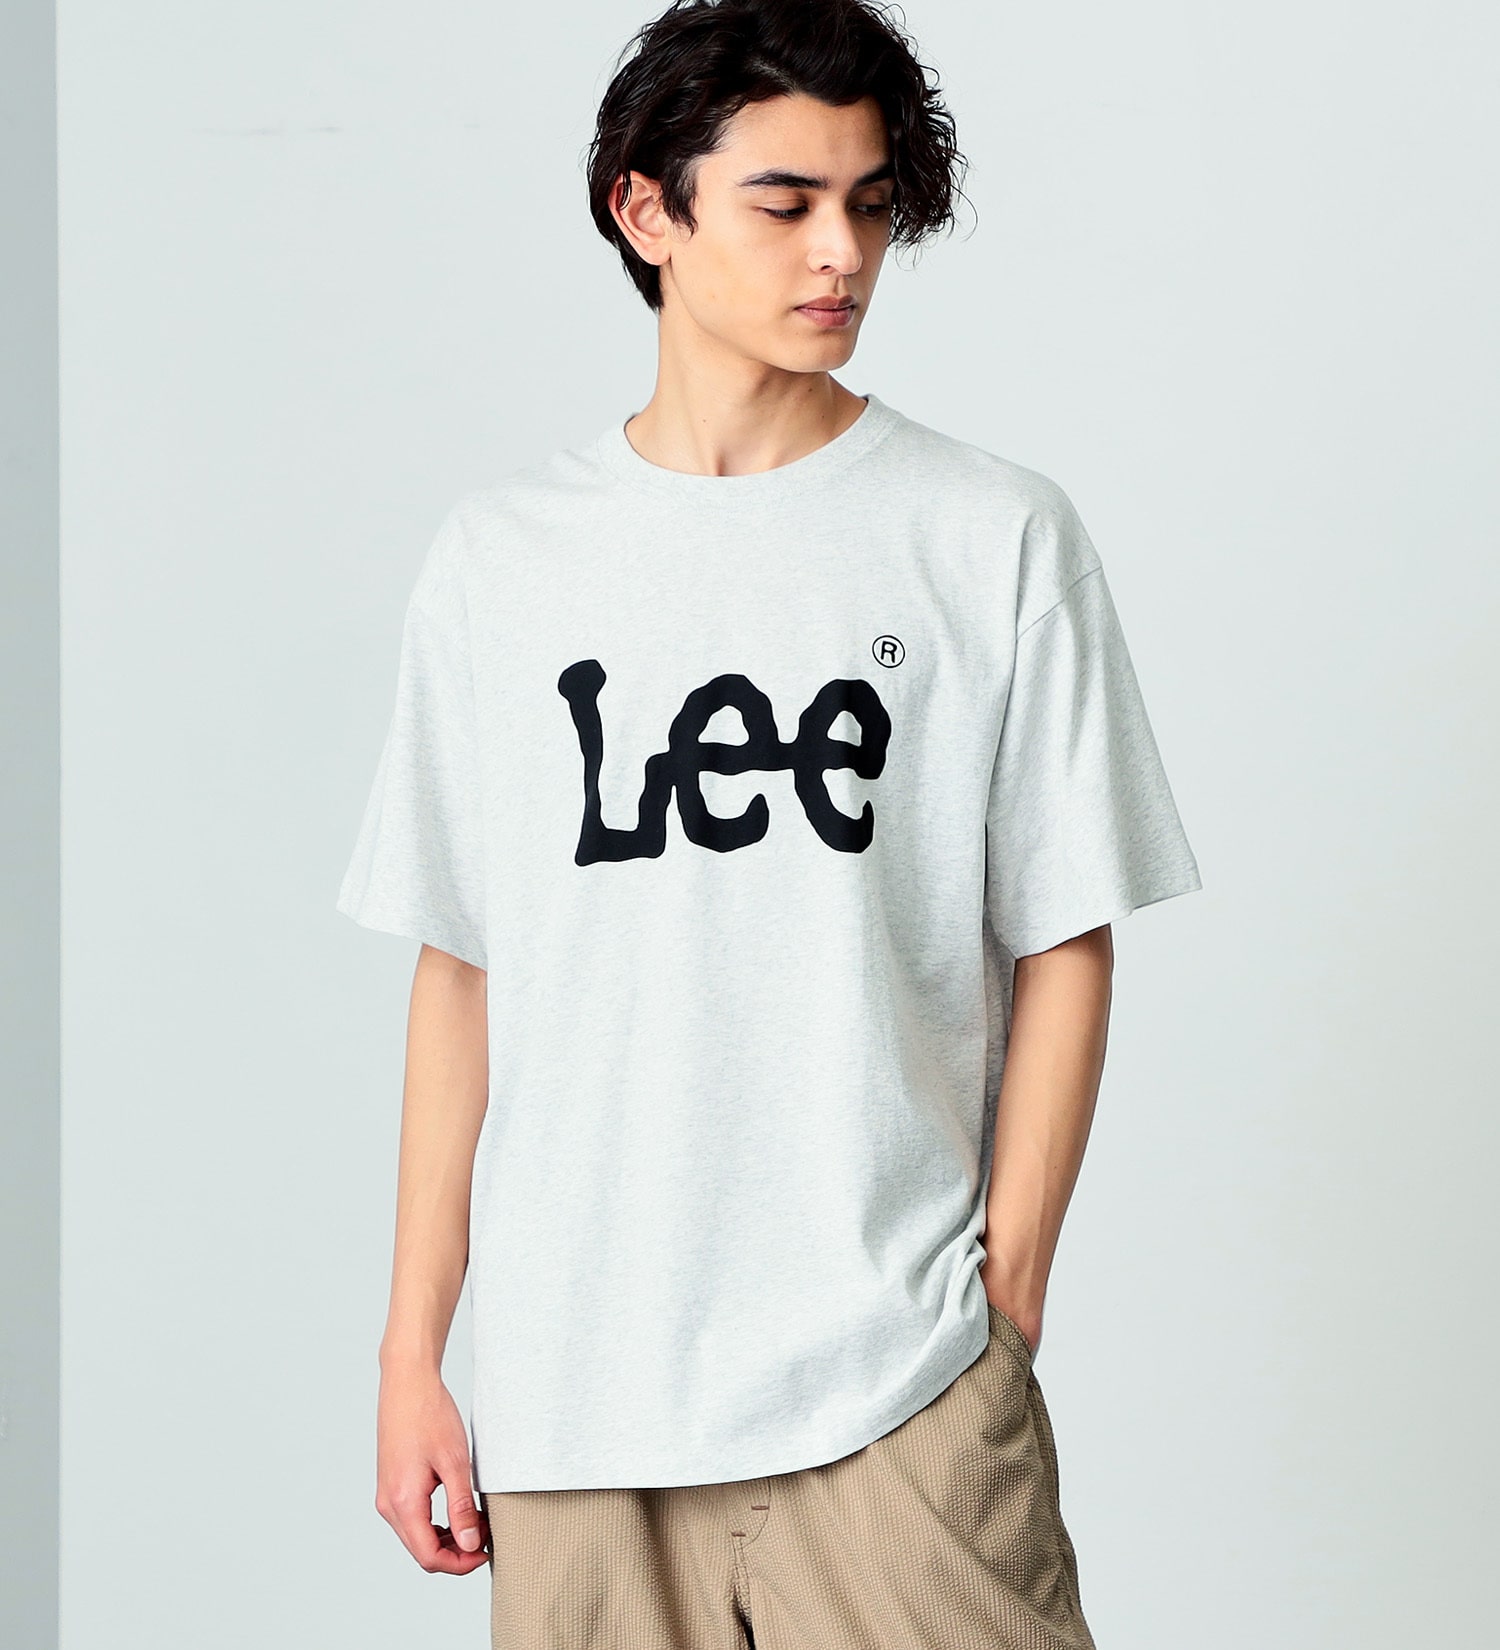 【FINAL SALE】【大きいサイズ】Leeロゴ半袖Tシャツ